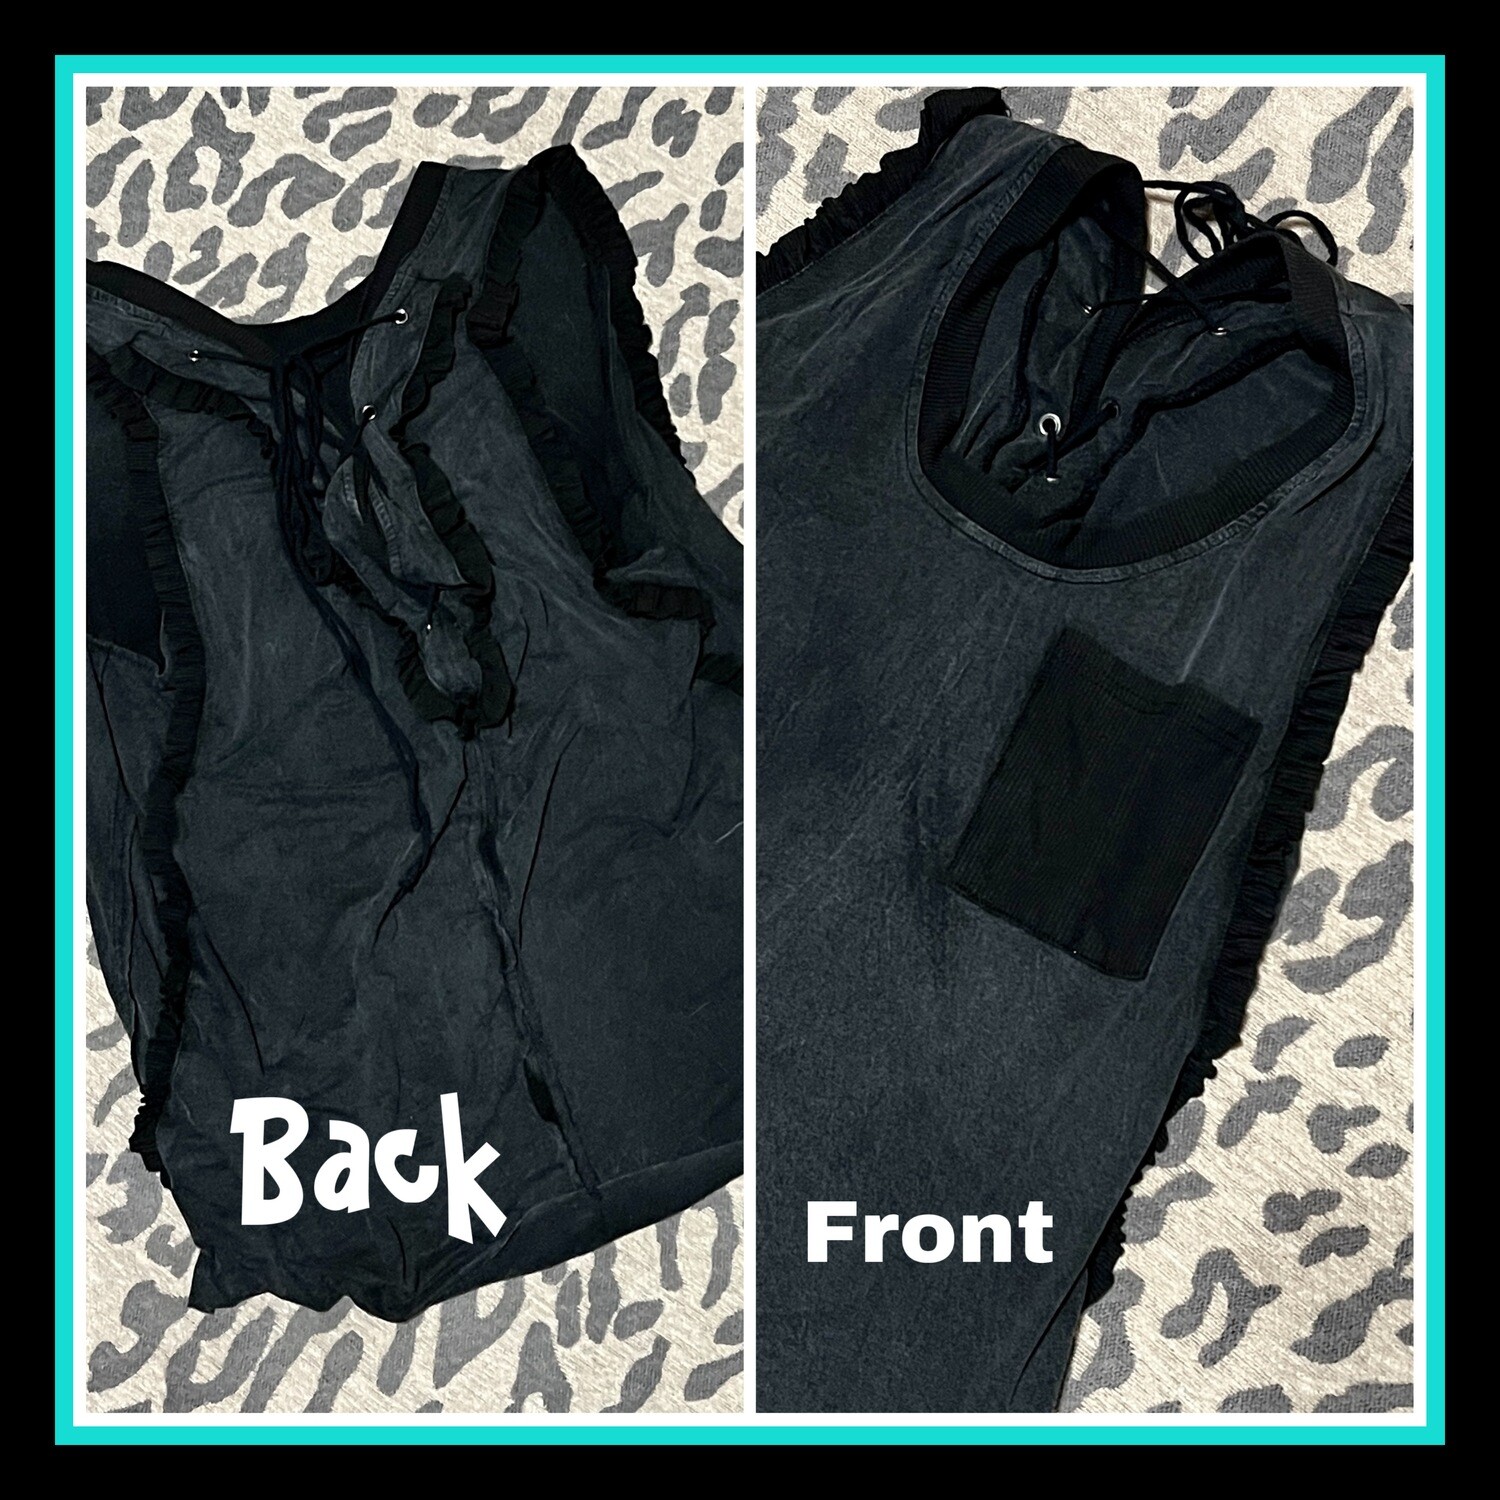 Black Lace Back Tank Top - L